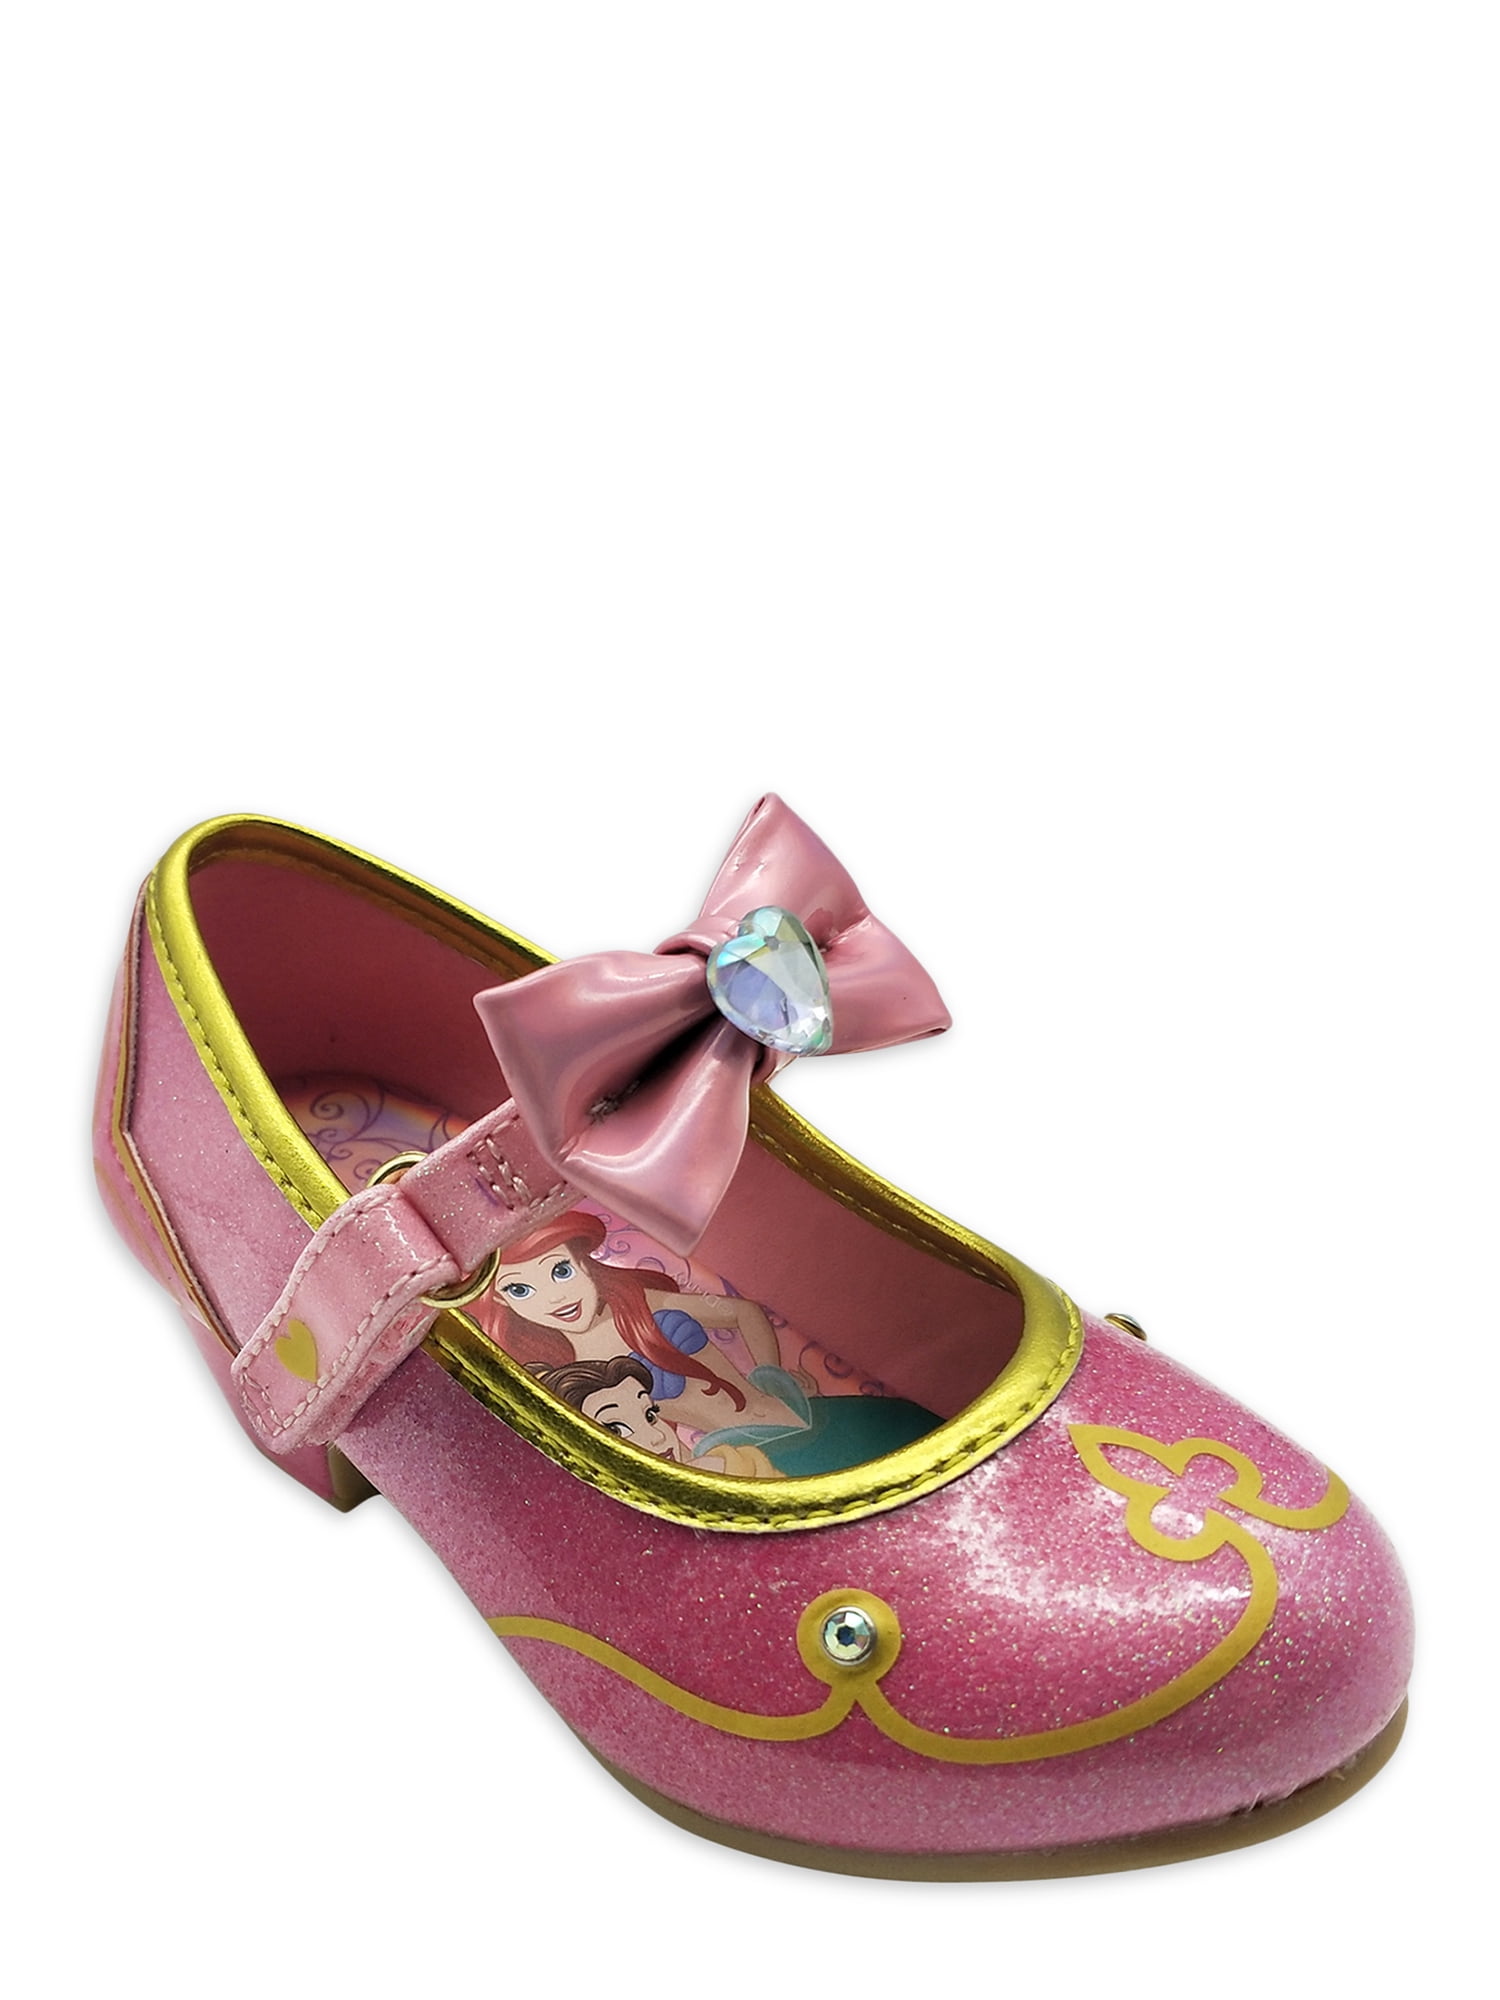 Toddler Girls' Disney Princess Mary Jane Shoe 6,7,8,9,10,11,12 Silver Sz 